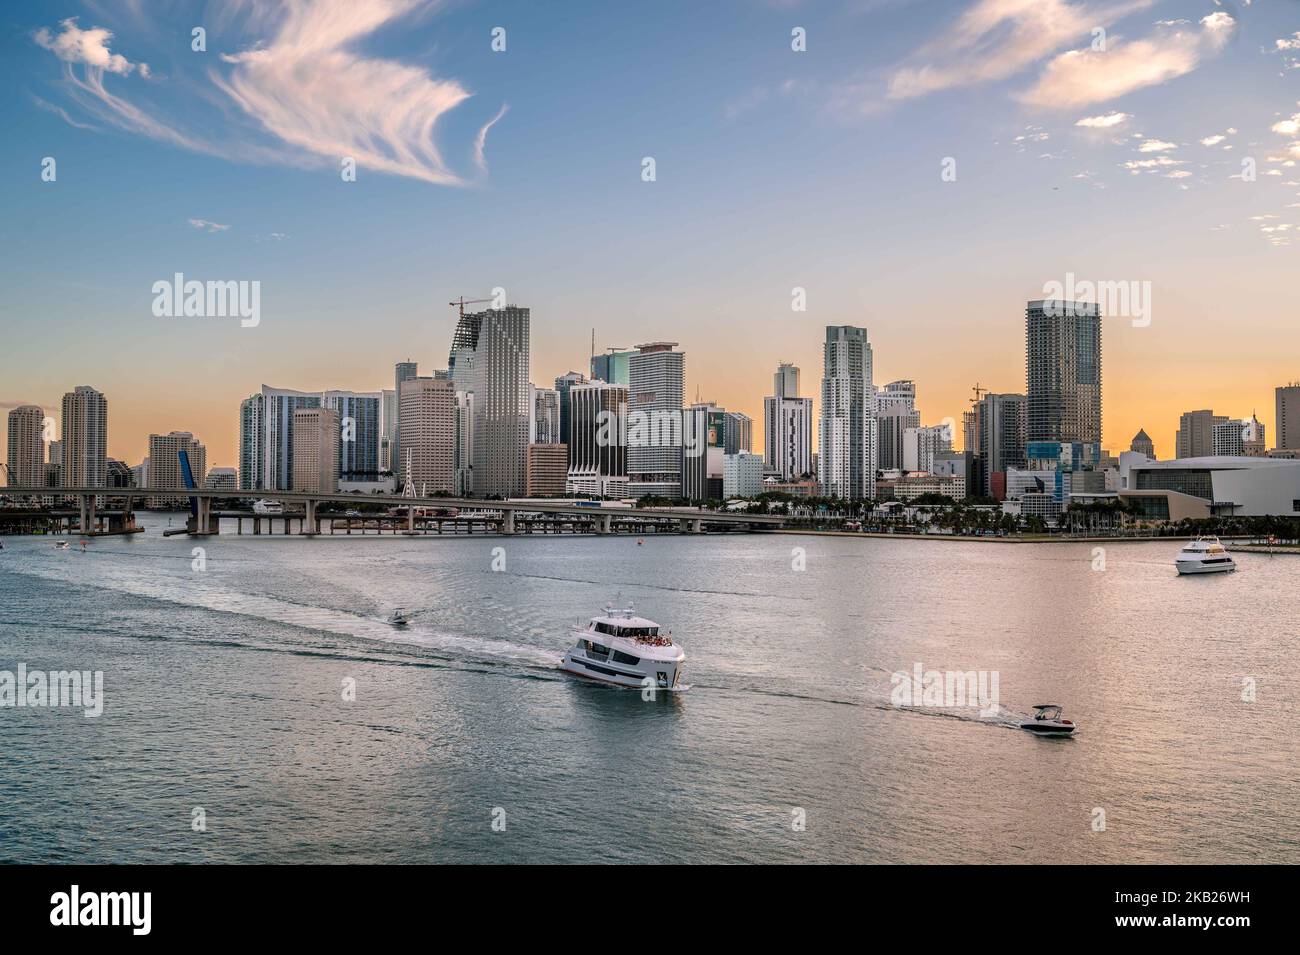 Golden hour Cityscape of Miami Brickell at Sunset - yacht Stock Photo